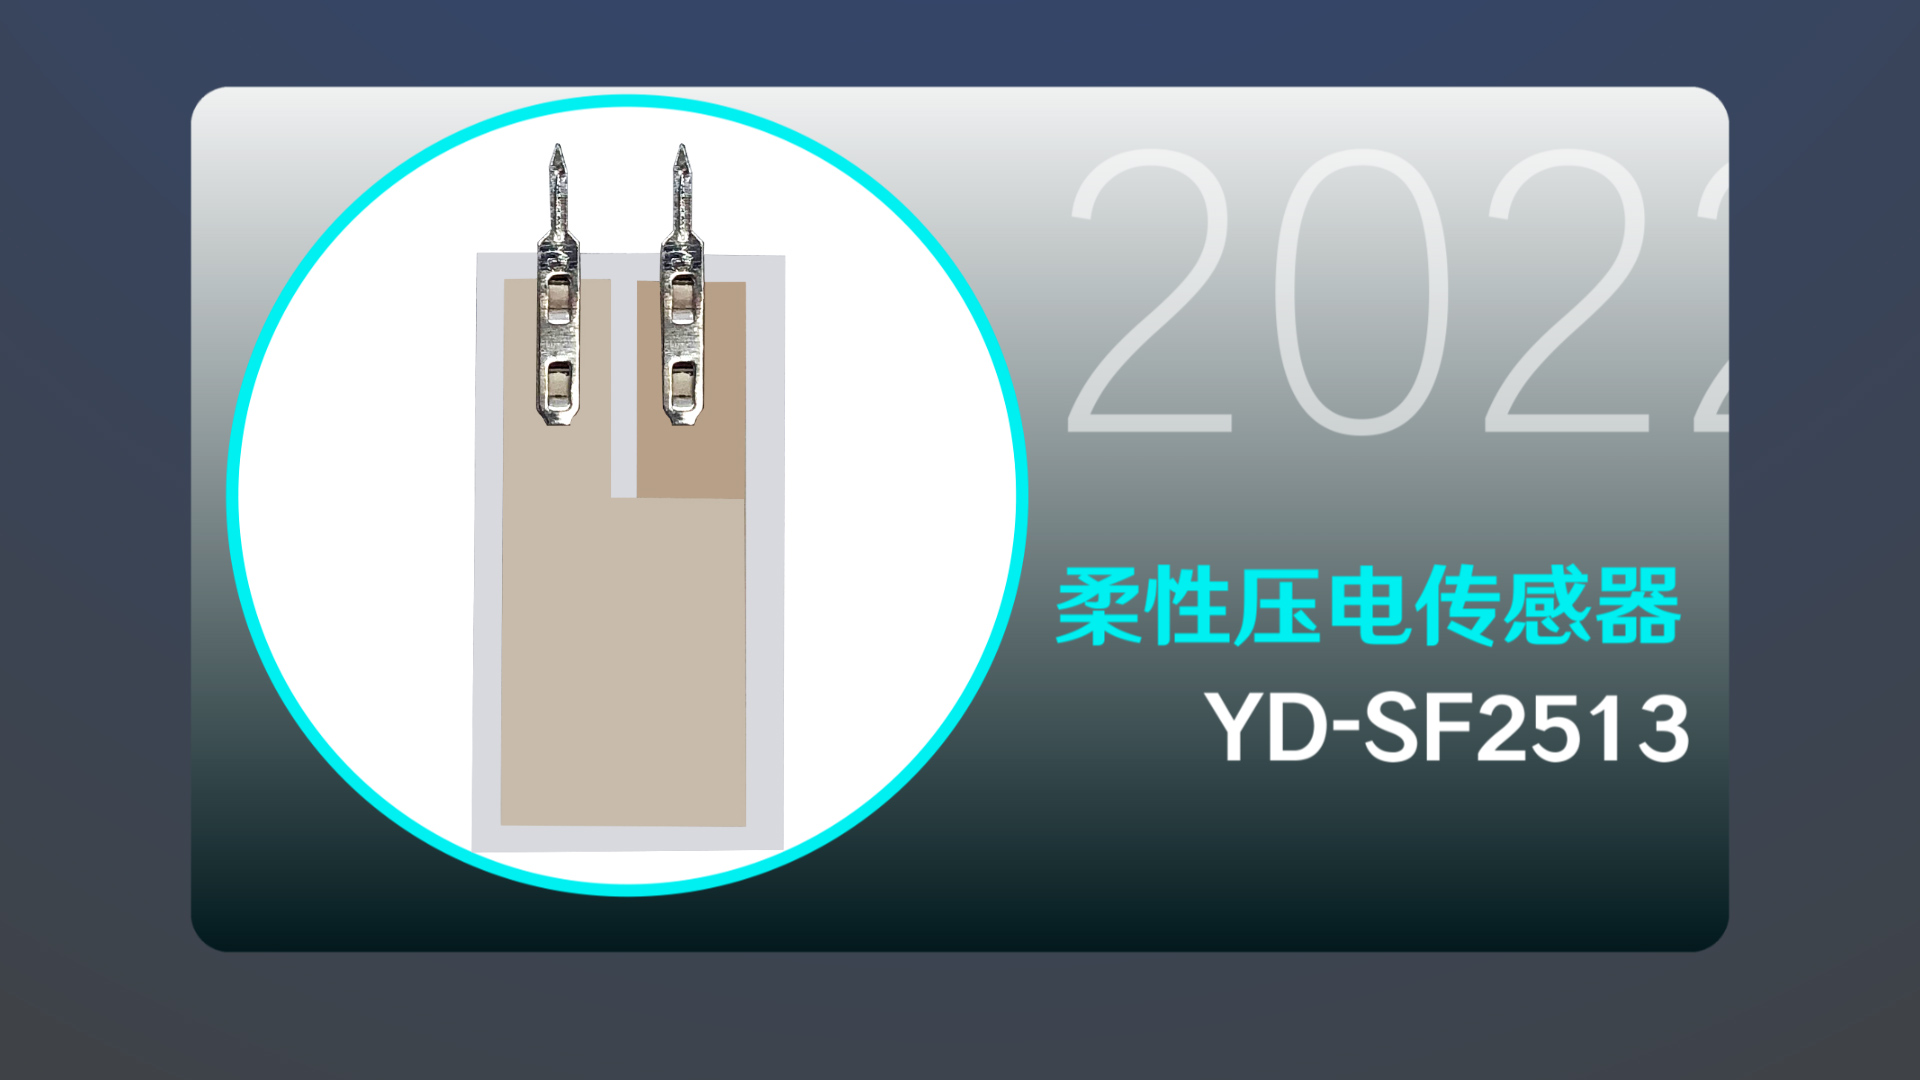 YD-SF2513 Flexible Piezoelectric Sensor